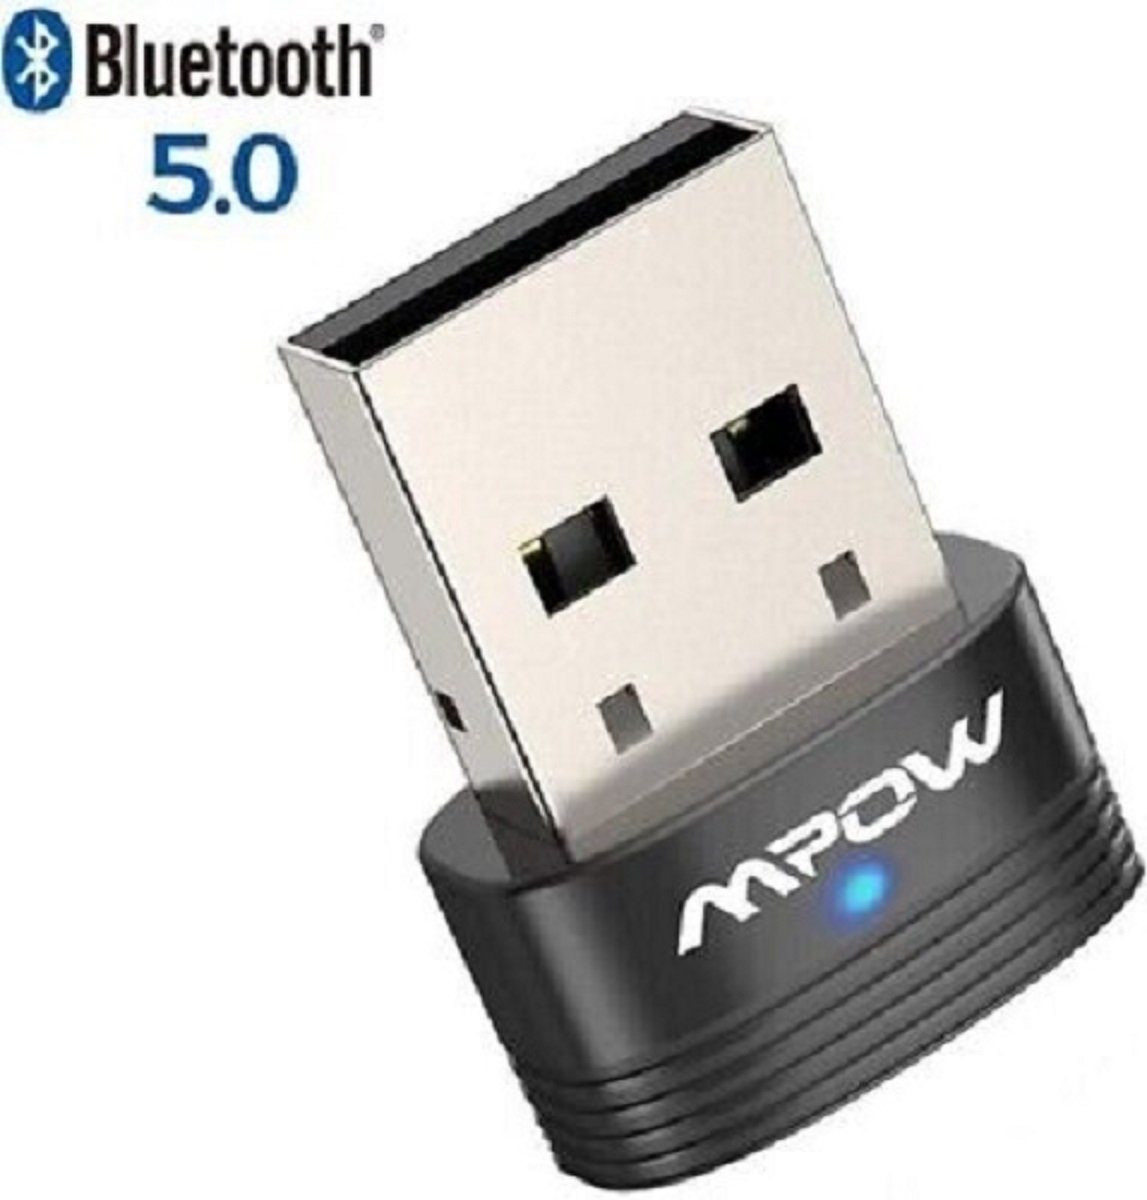 Mpow Bluetooth®-Sender Bluetooth 5.0 Empfänger USB Sender Dongle